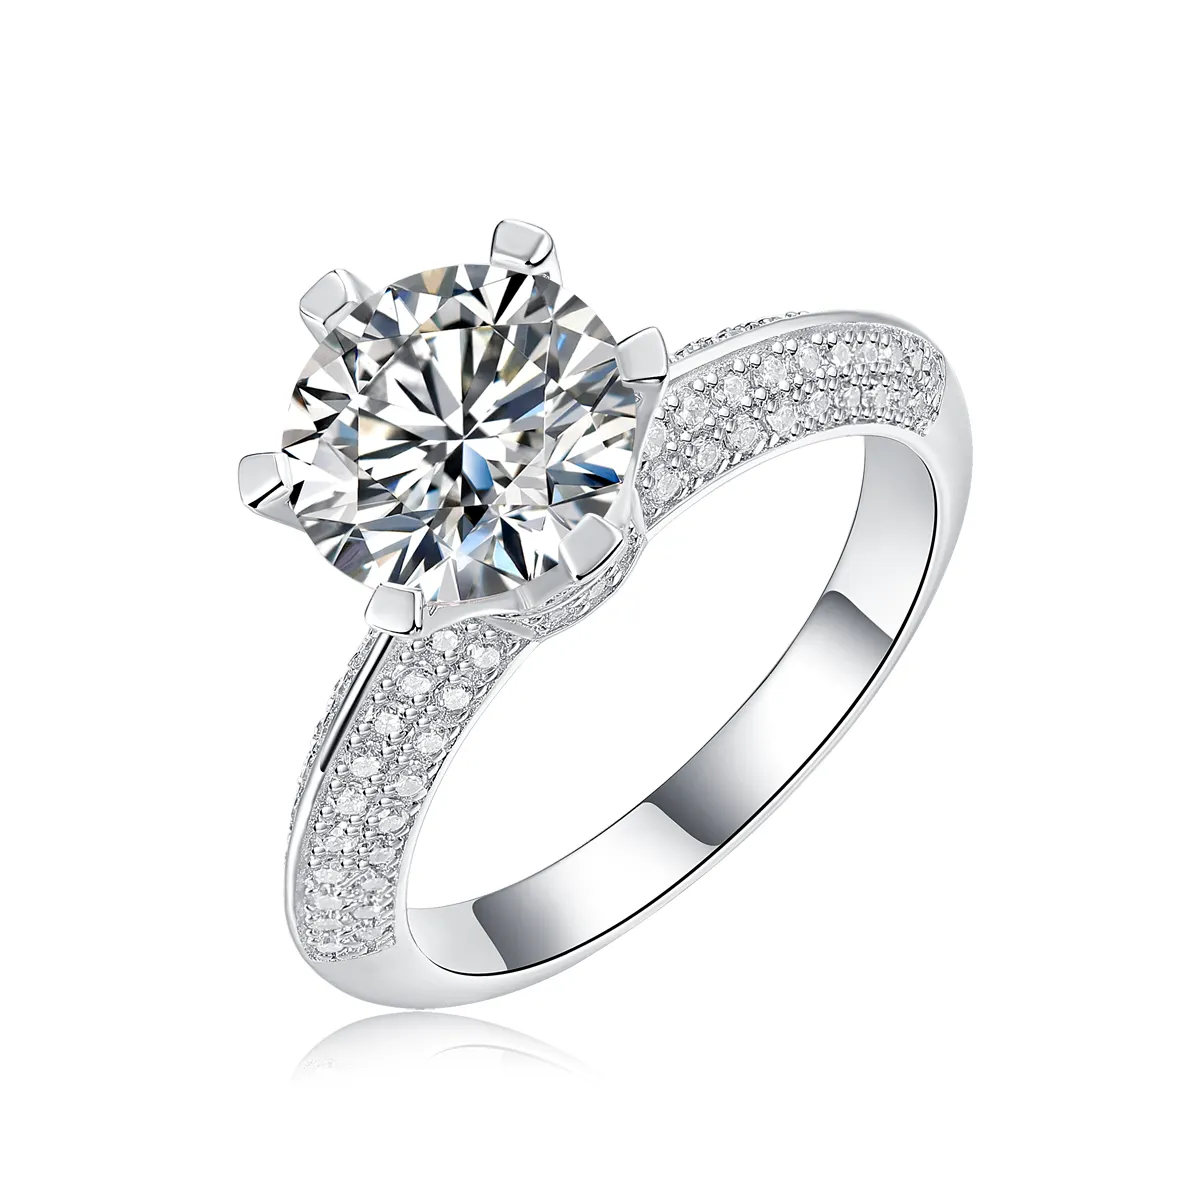 Joyería fina Gra Certified 925 Sterling Silver Mujeres 3,0 Quilates Anillo de compromiso Moissanite Diamond Wedding Ring